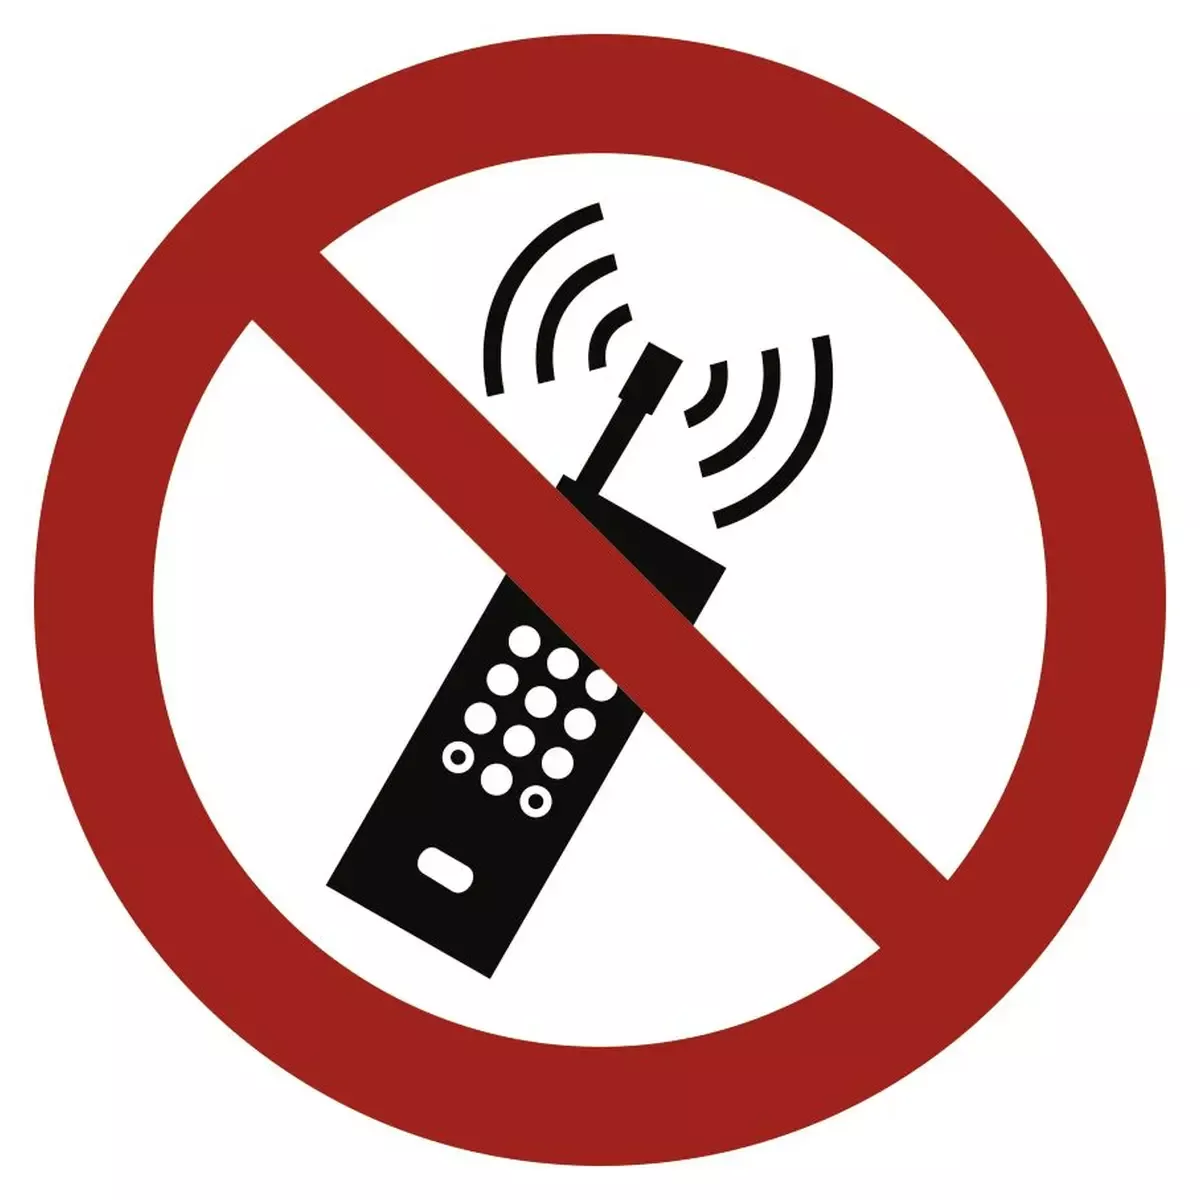 Eingeschaltete Mobiltelefone verboten ISO 7010, Kunststoff, Ø 200 mm